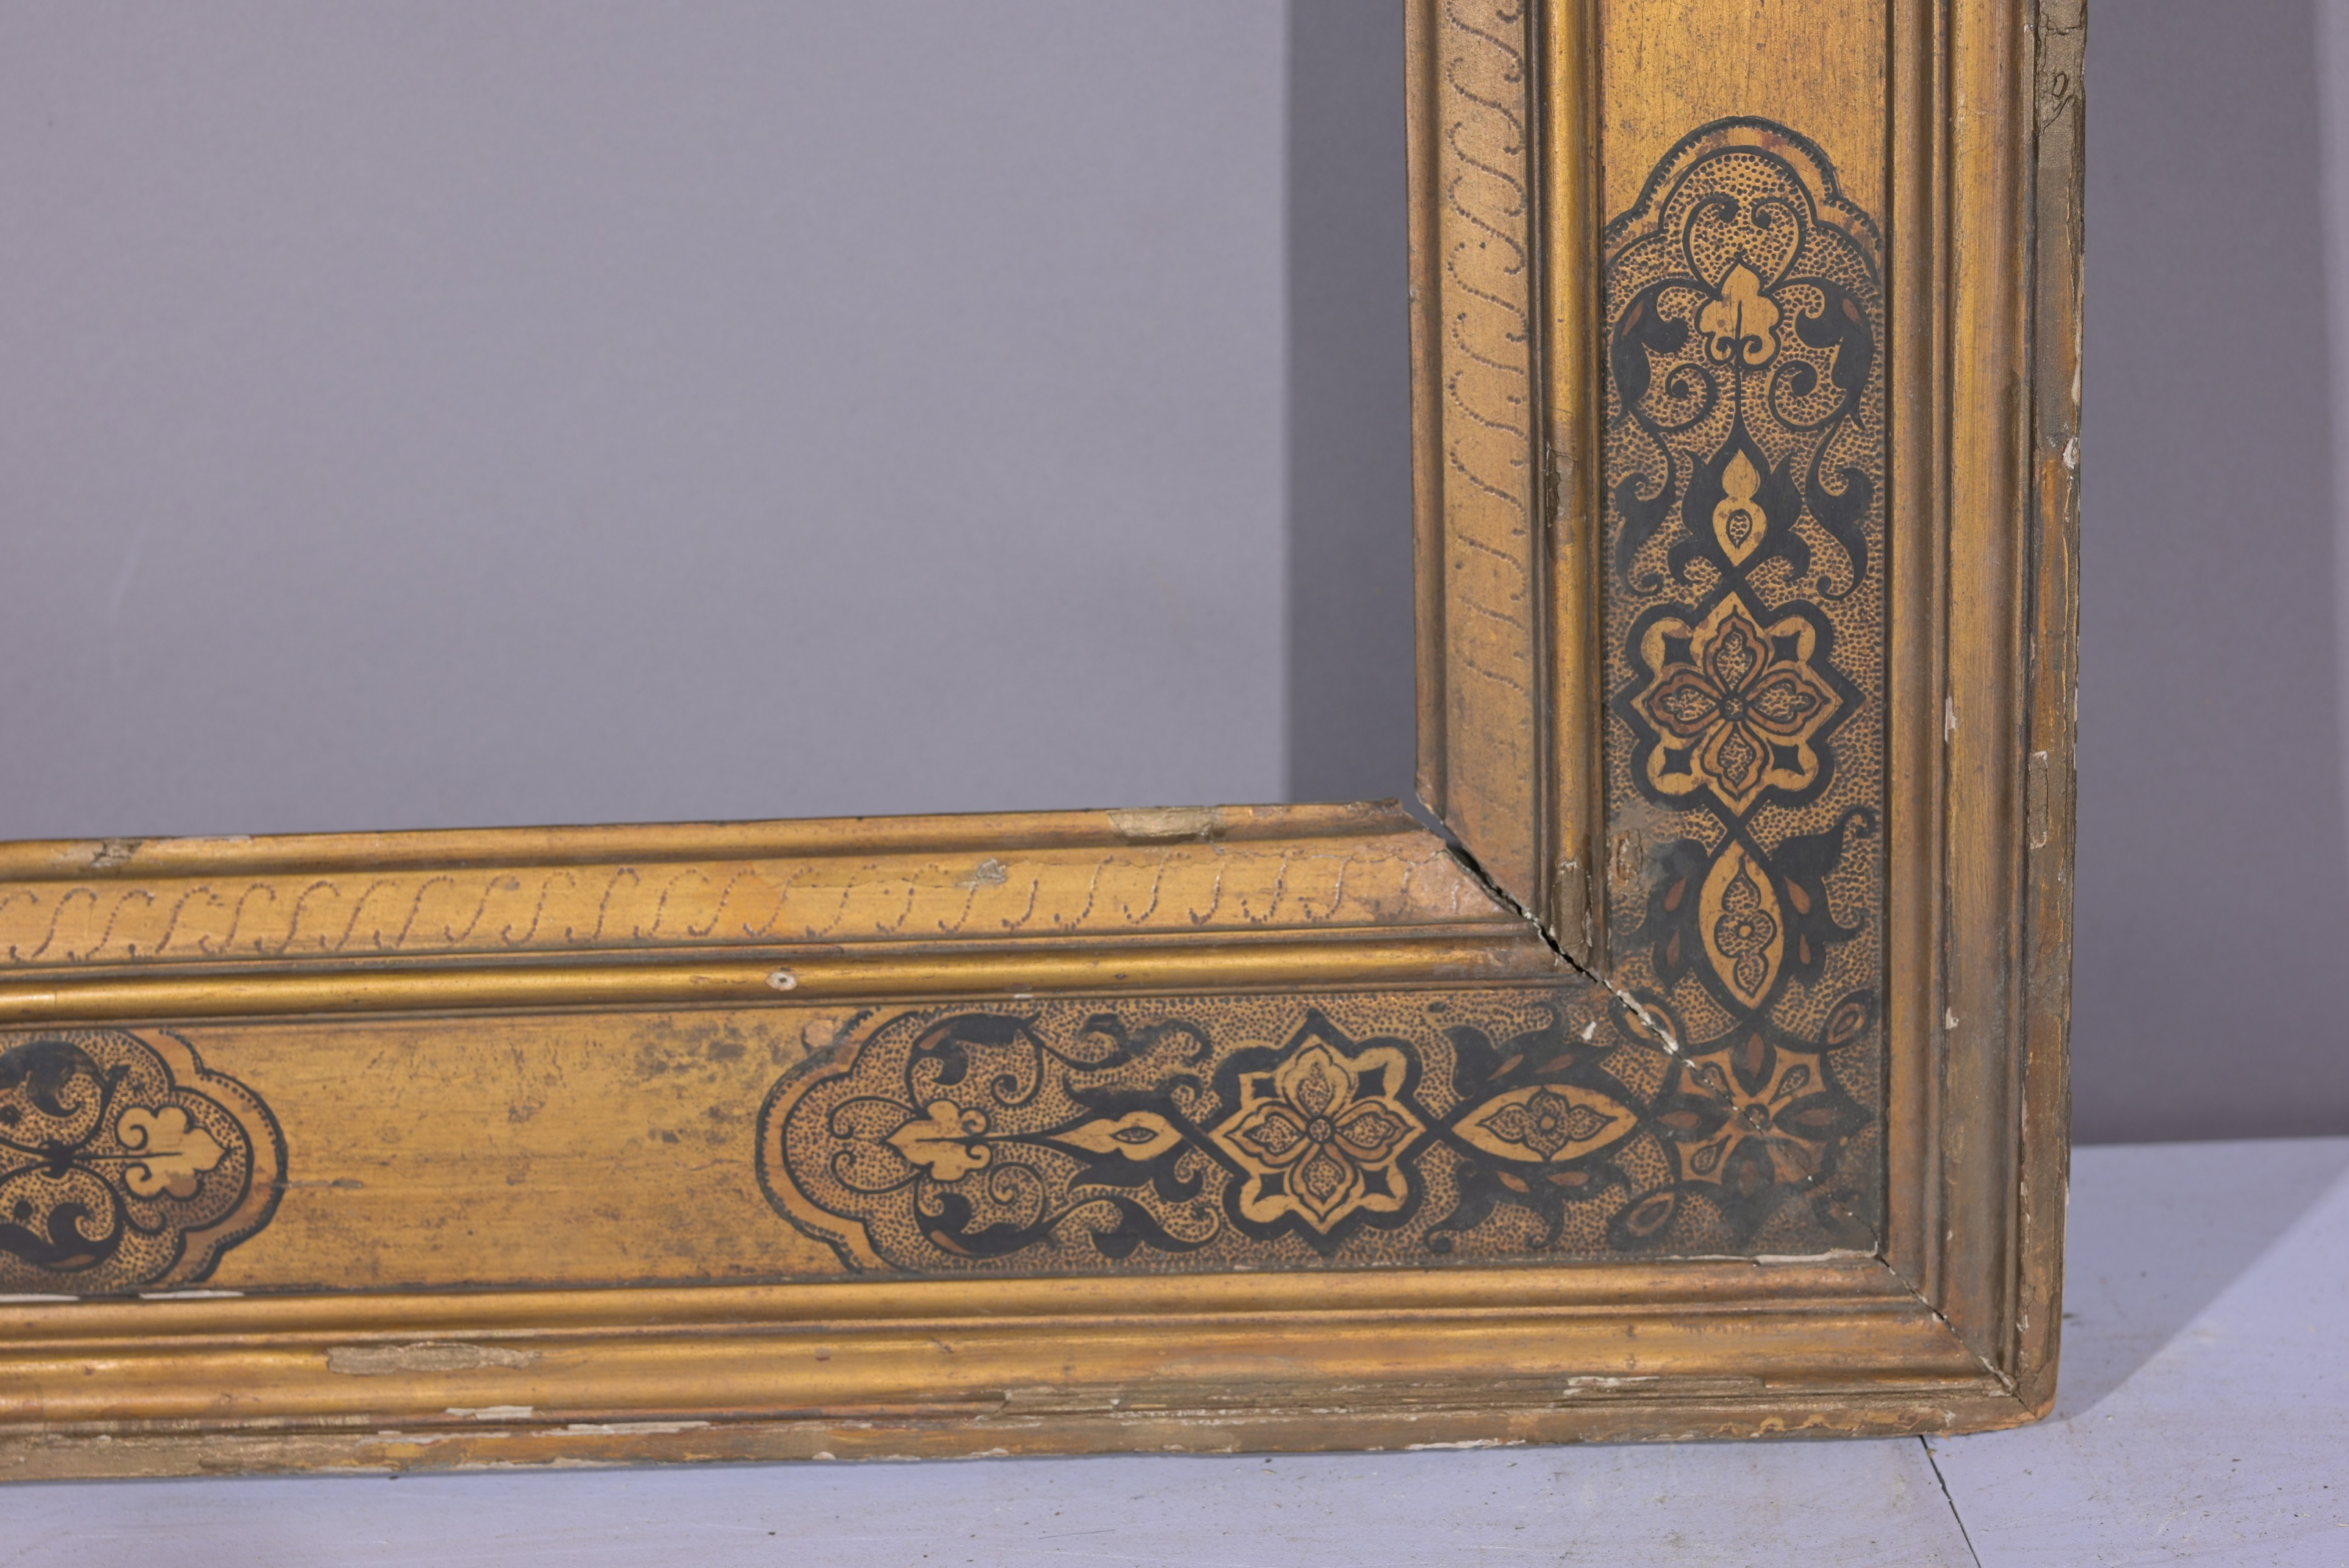 19th C. European Gilt Wood Frame - 33.75 x 22.75 - Image 5 of 8